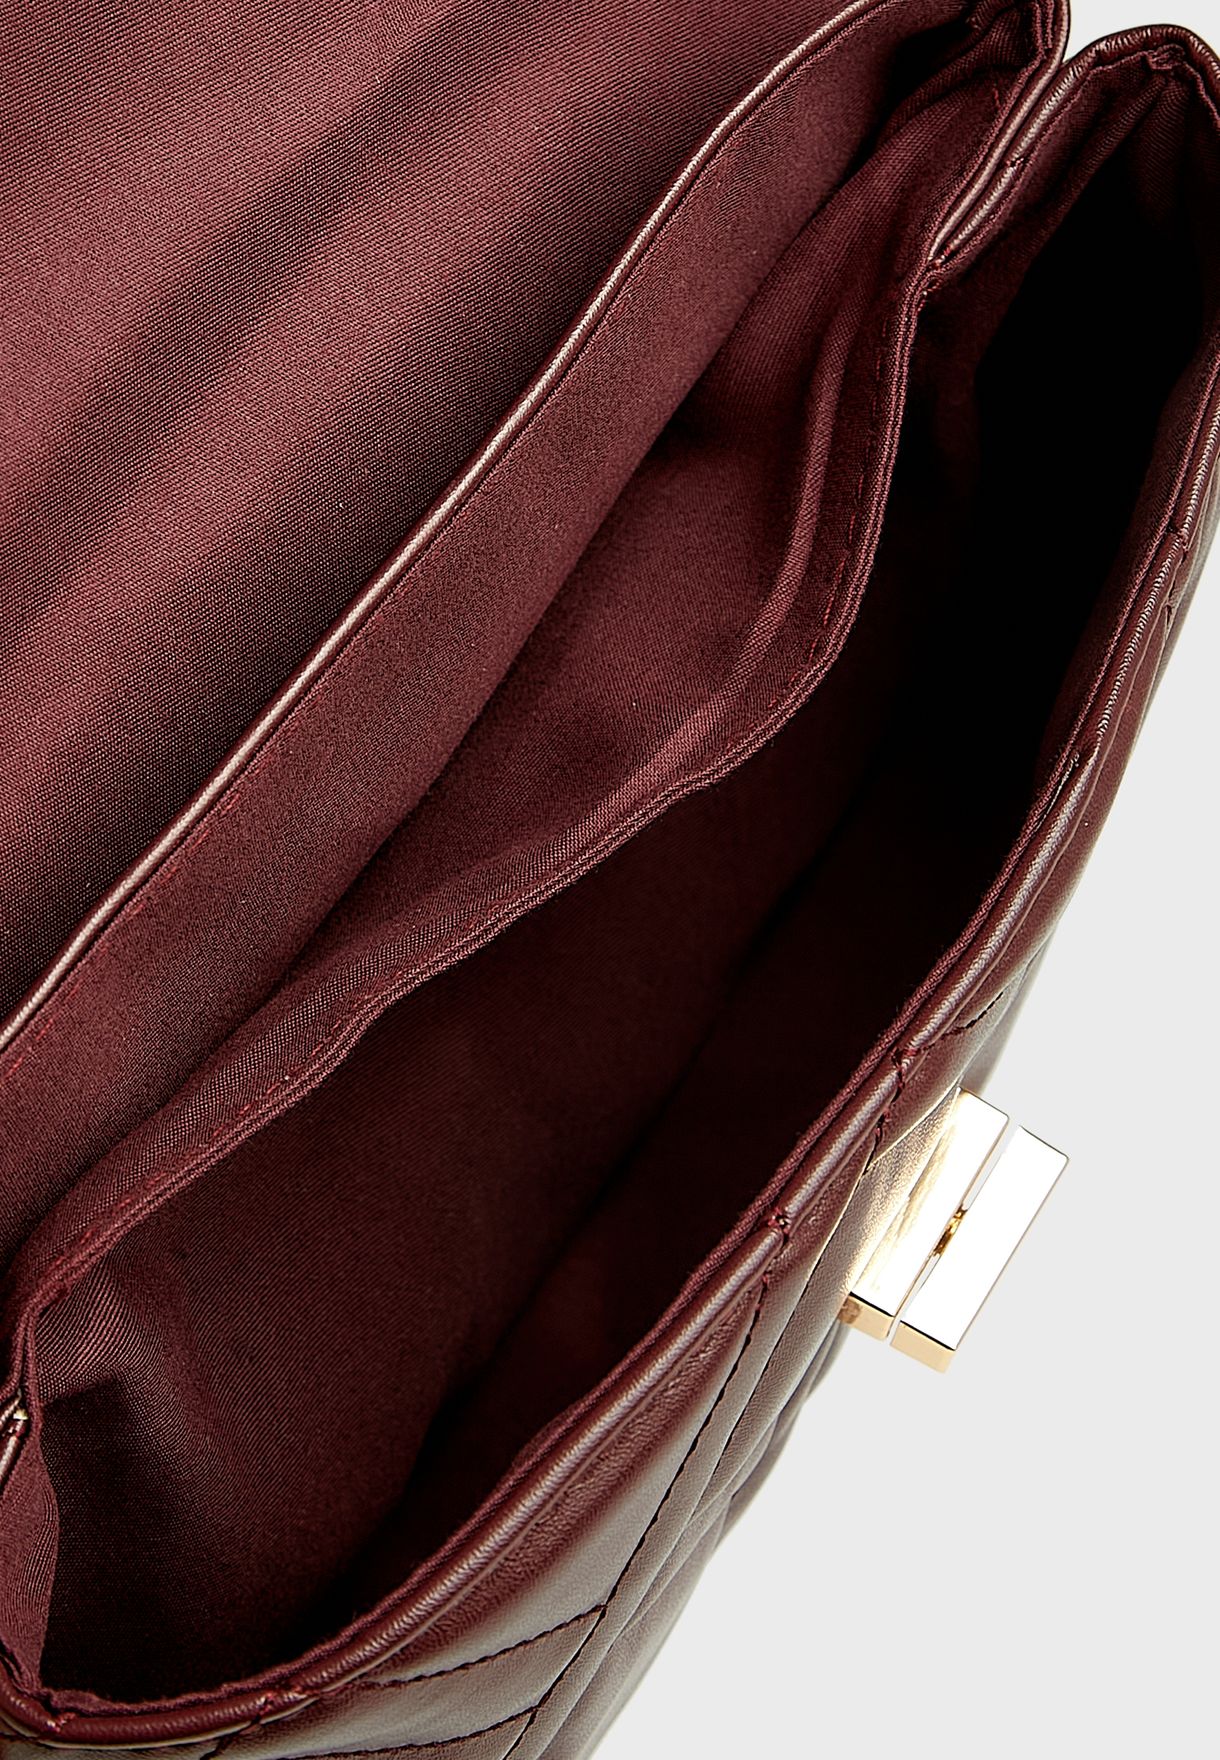 Quilted Satchel Handbag With Scarf Tie Handle